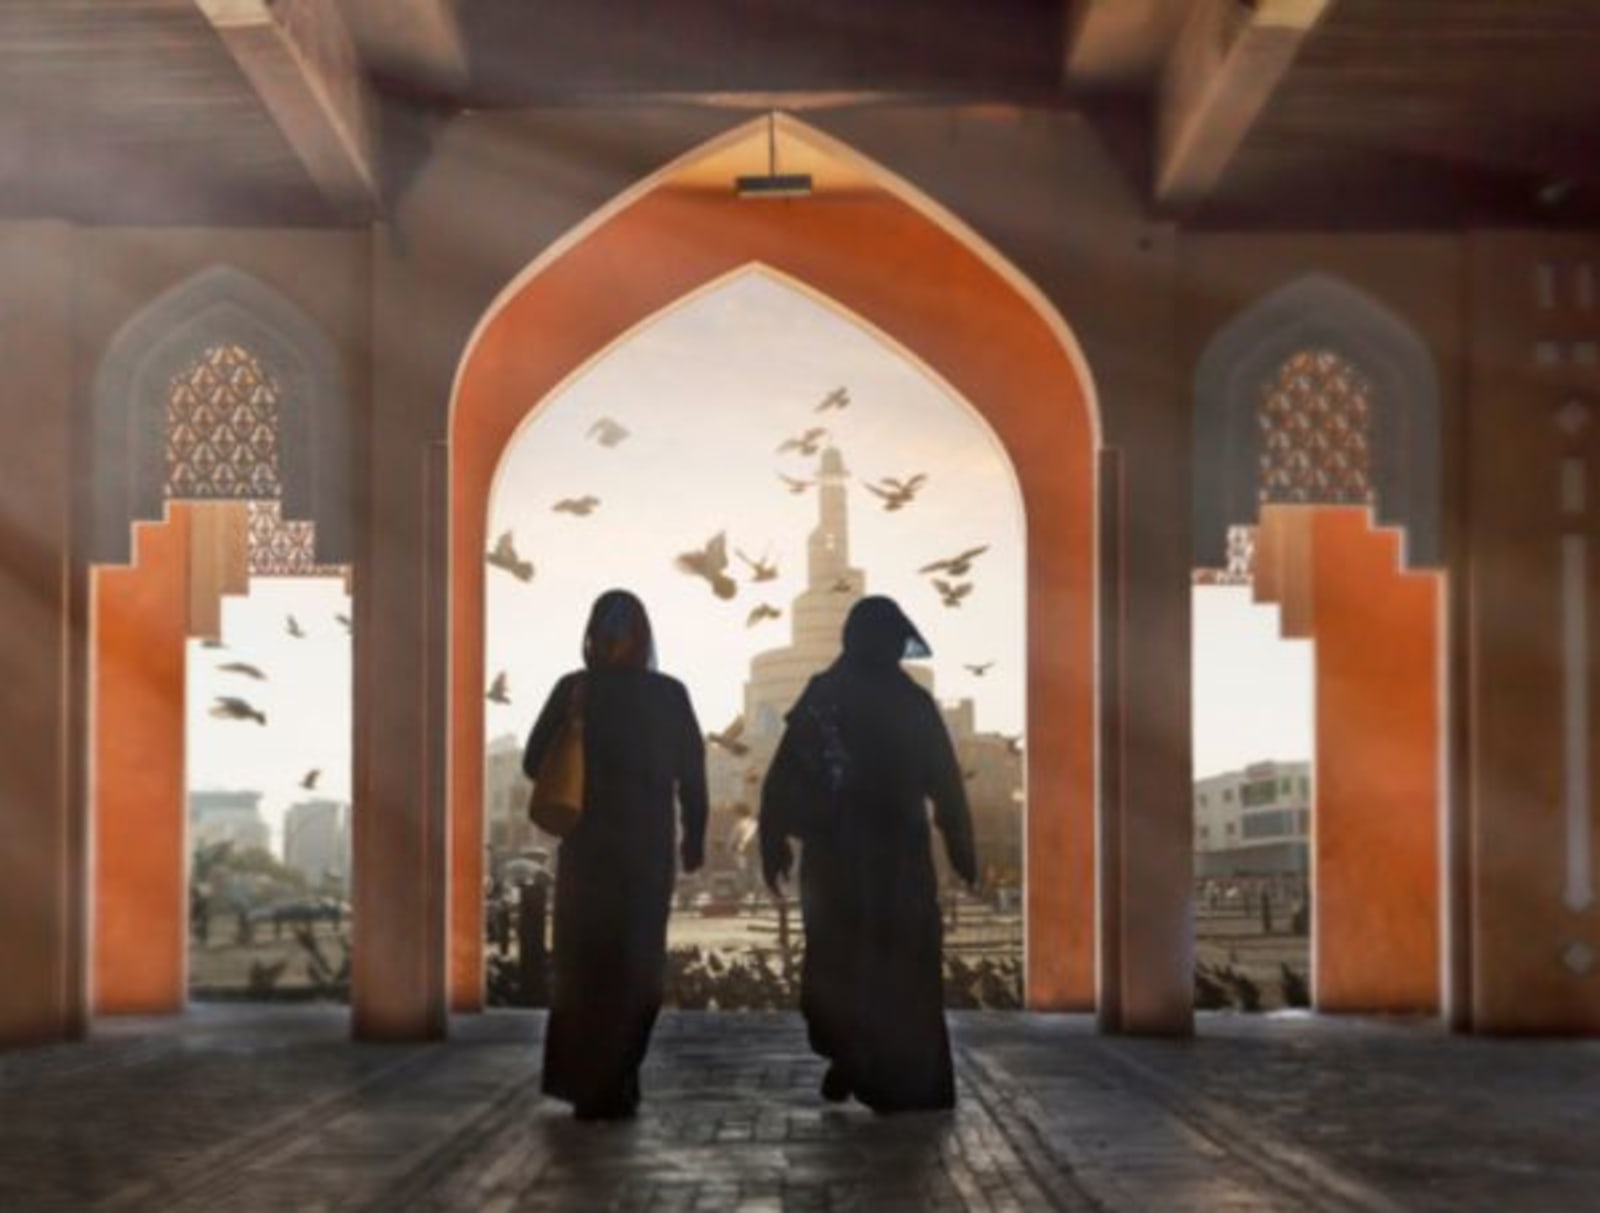 Two Qatari women walk through the entrance to a mosque